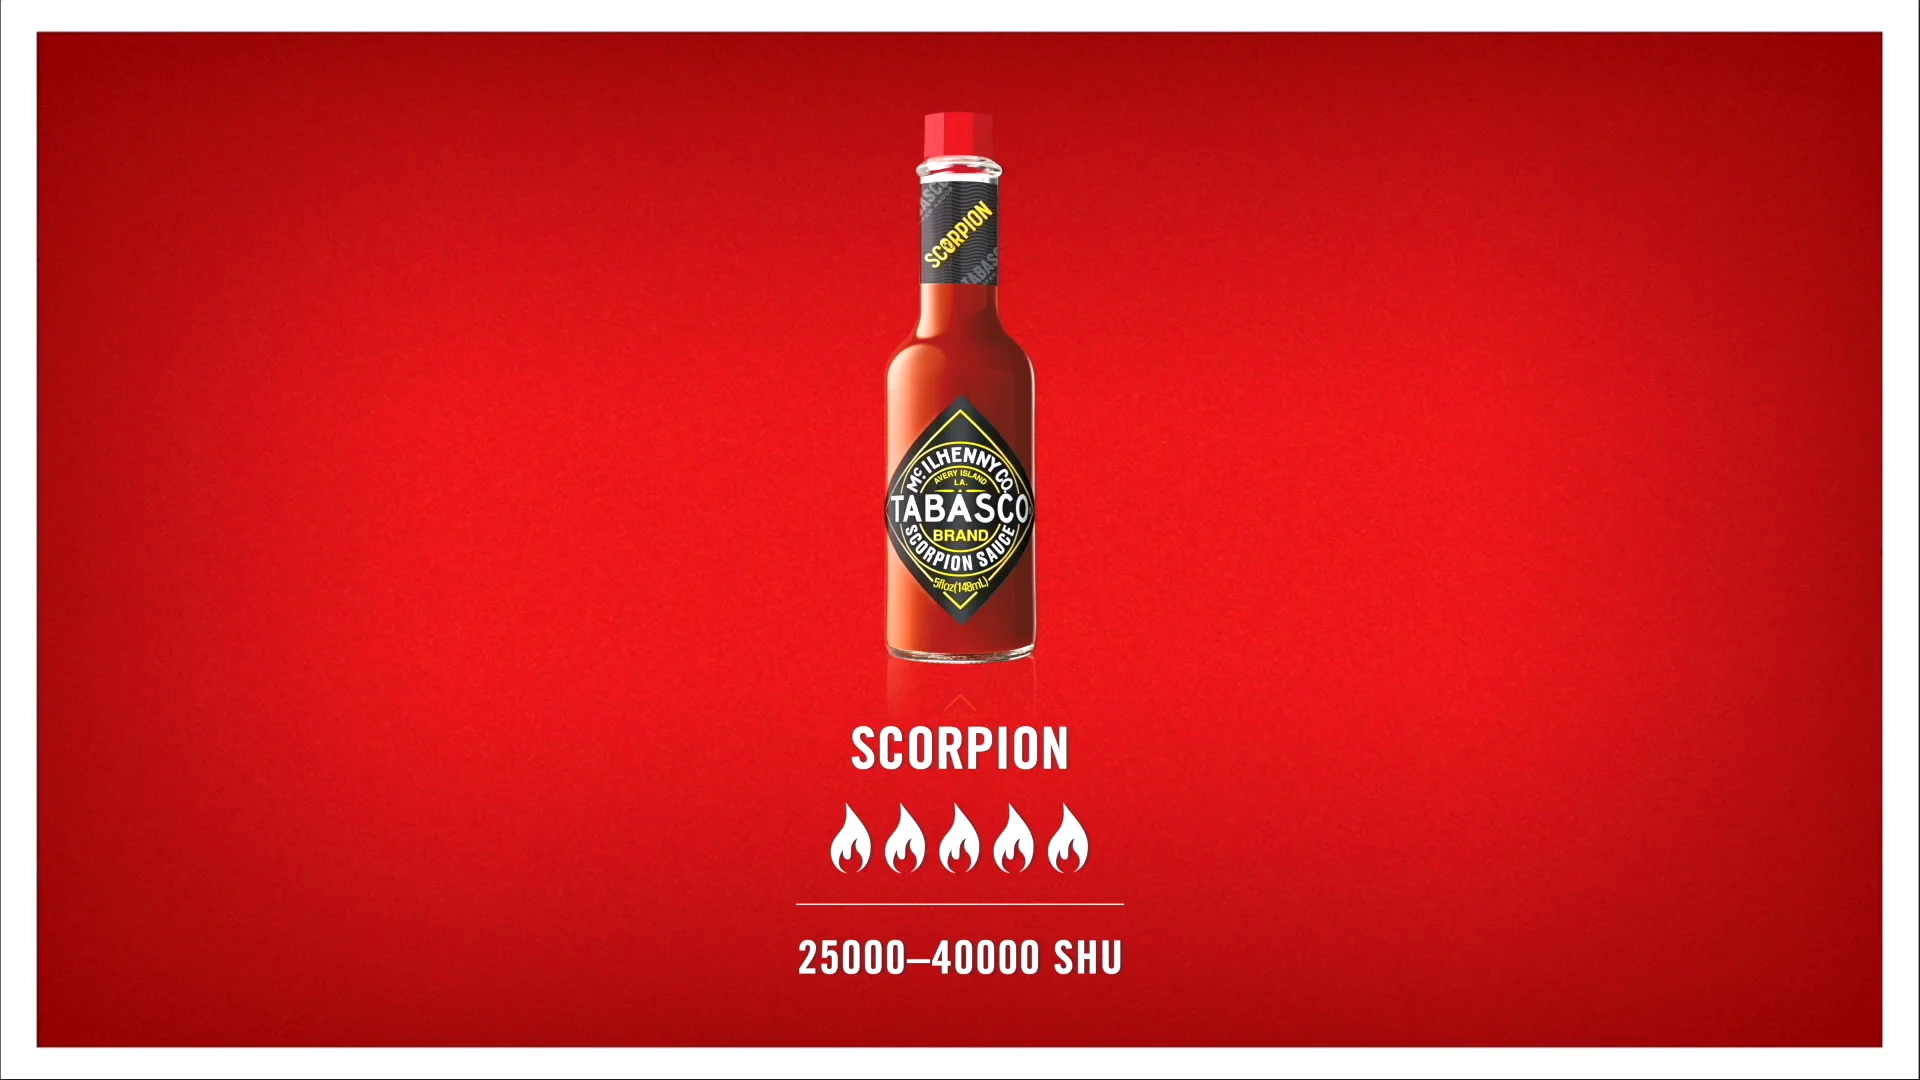 TABASCO® Brand Scorpion Sauce on Vimeo